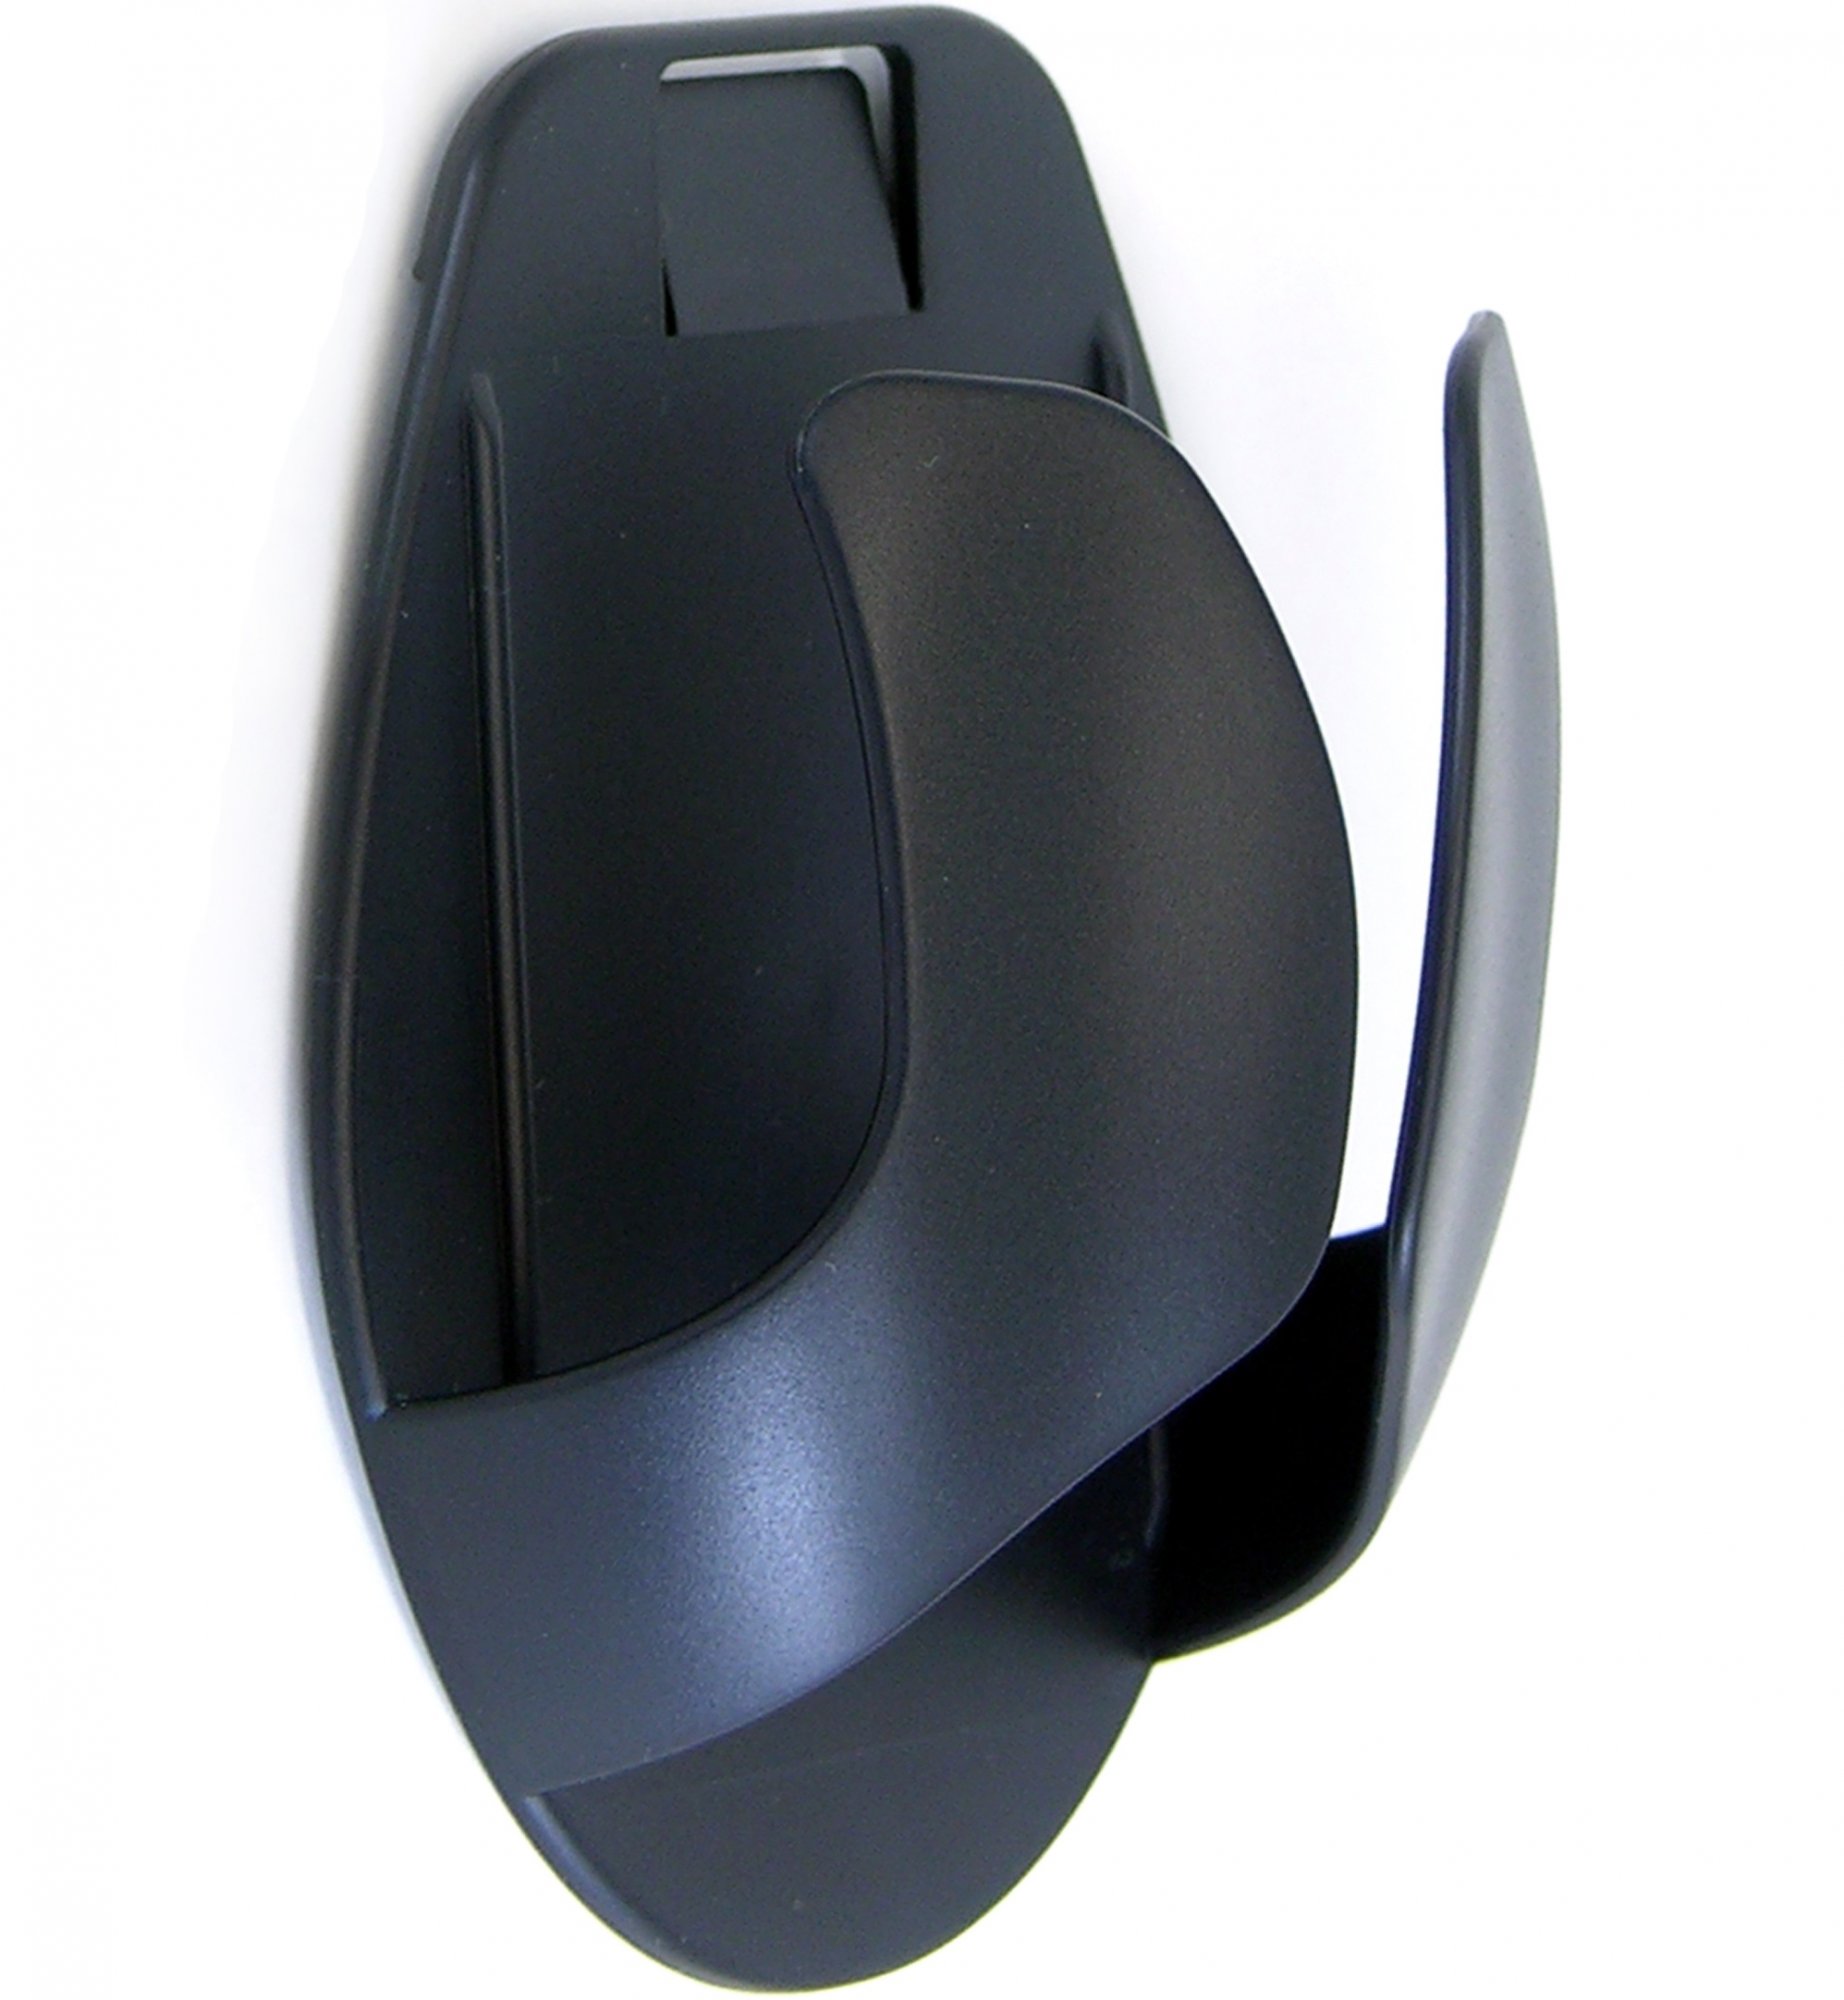 Ergotron 99-033-085 Mouse Holder (black)